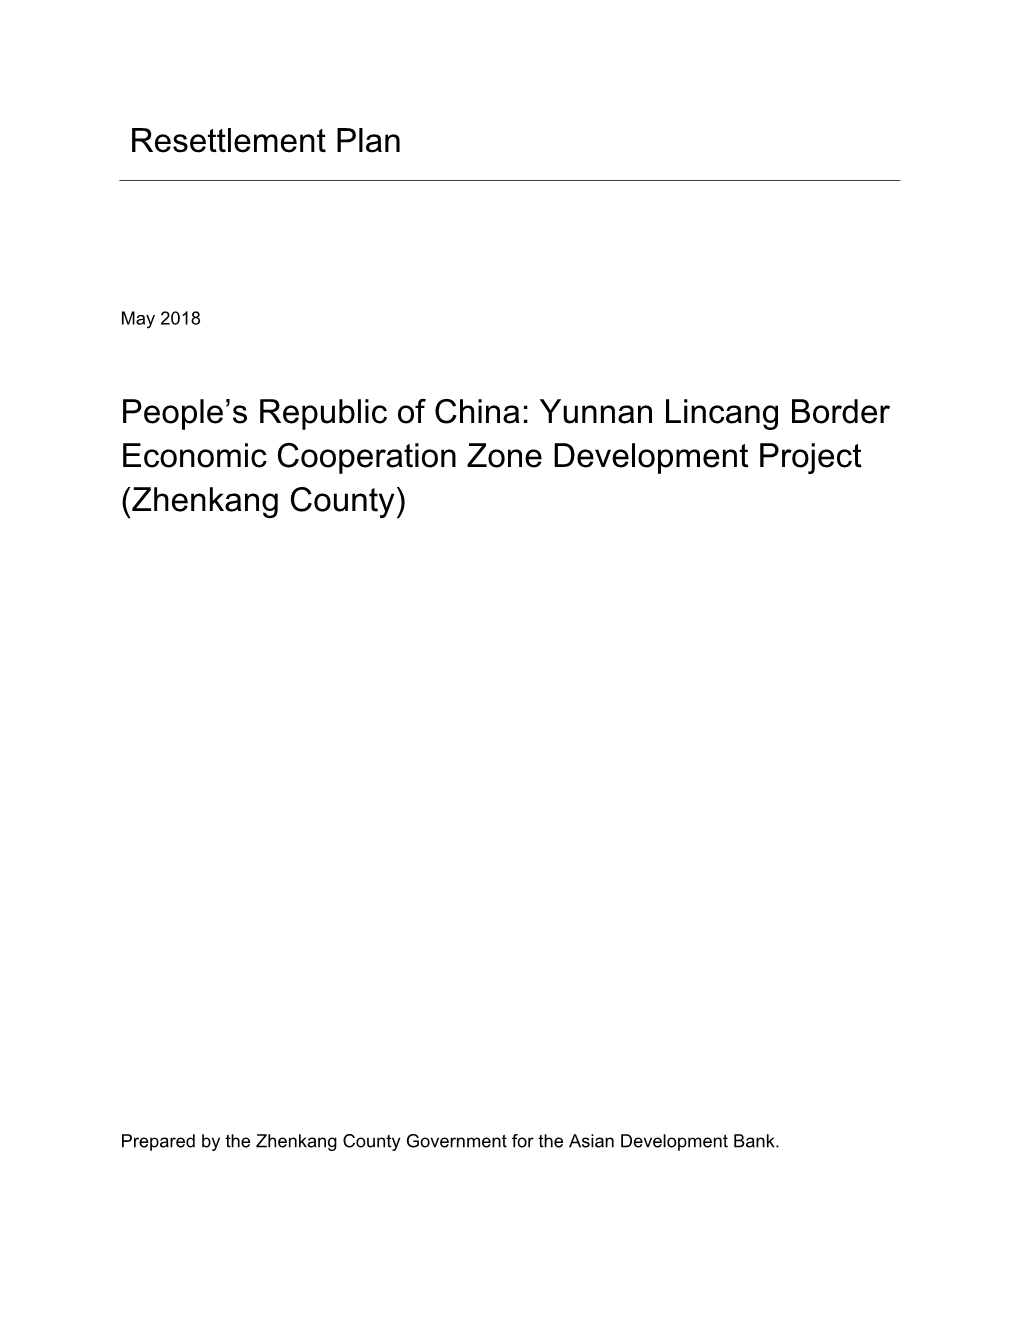 Yunnan Lincang Border Economic Cooperation Zone Development Project (Zhenkang County)